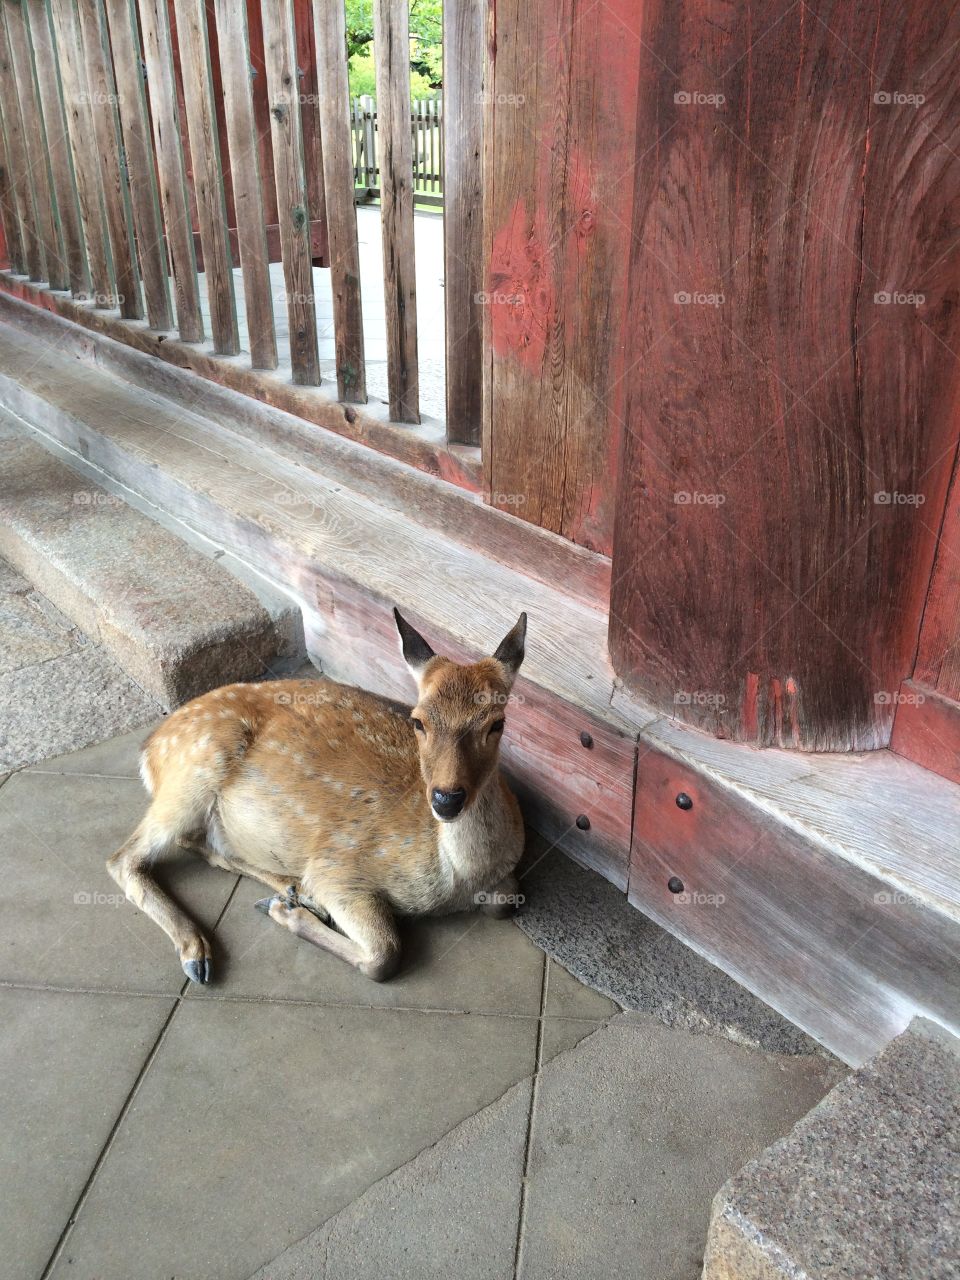 Deer, Nara - Japan. Deer